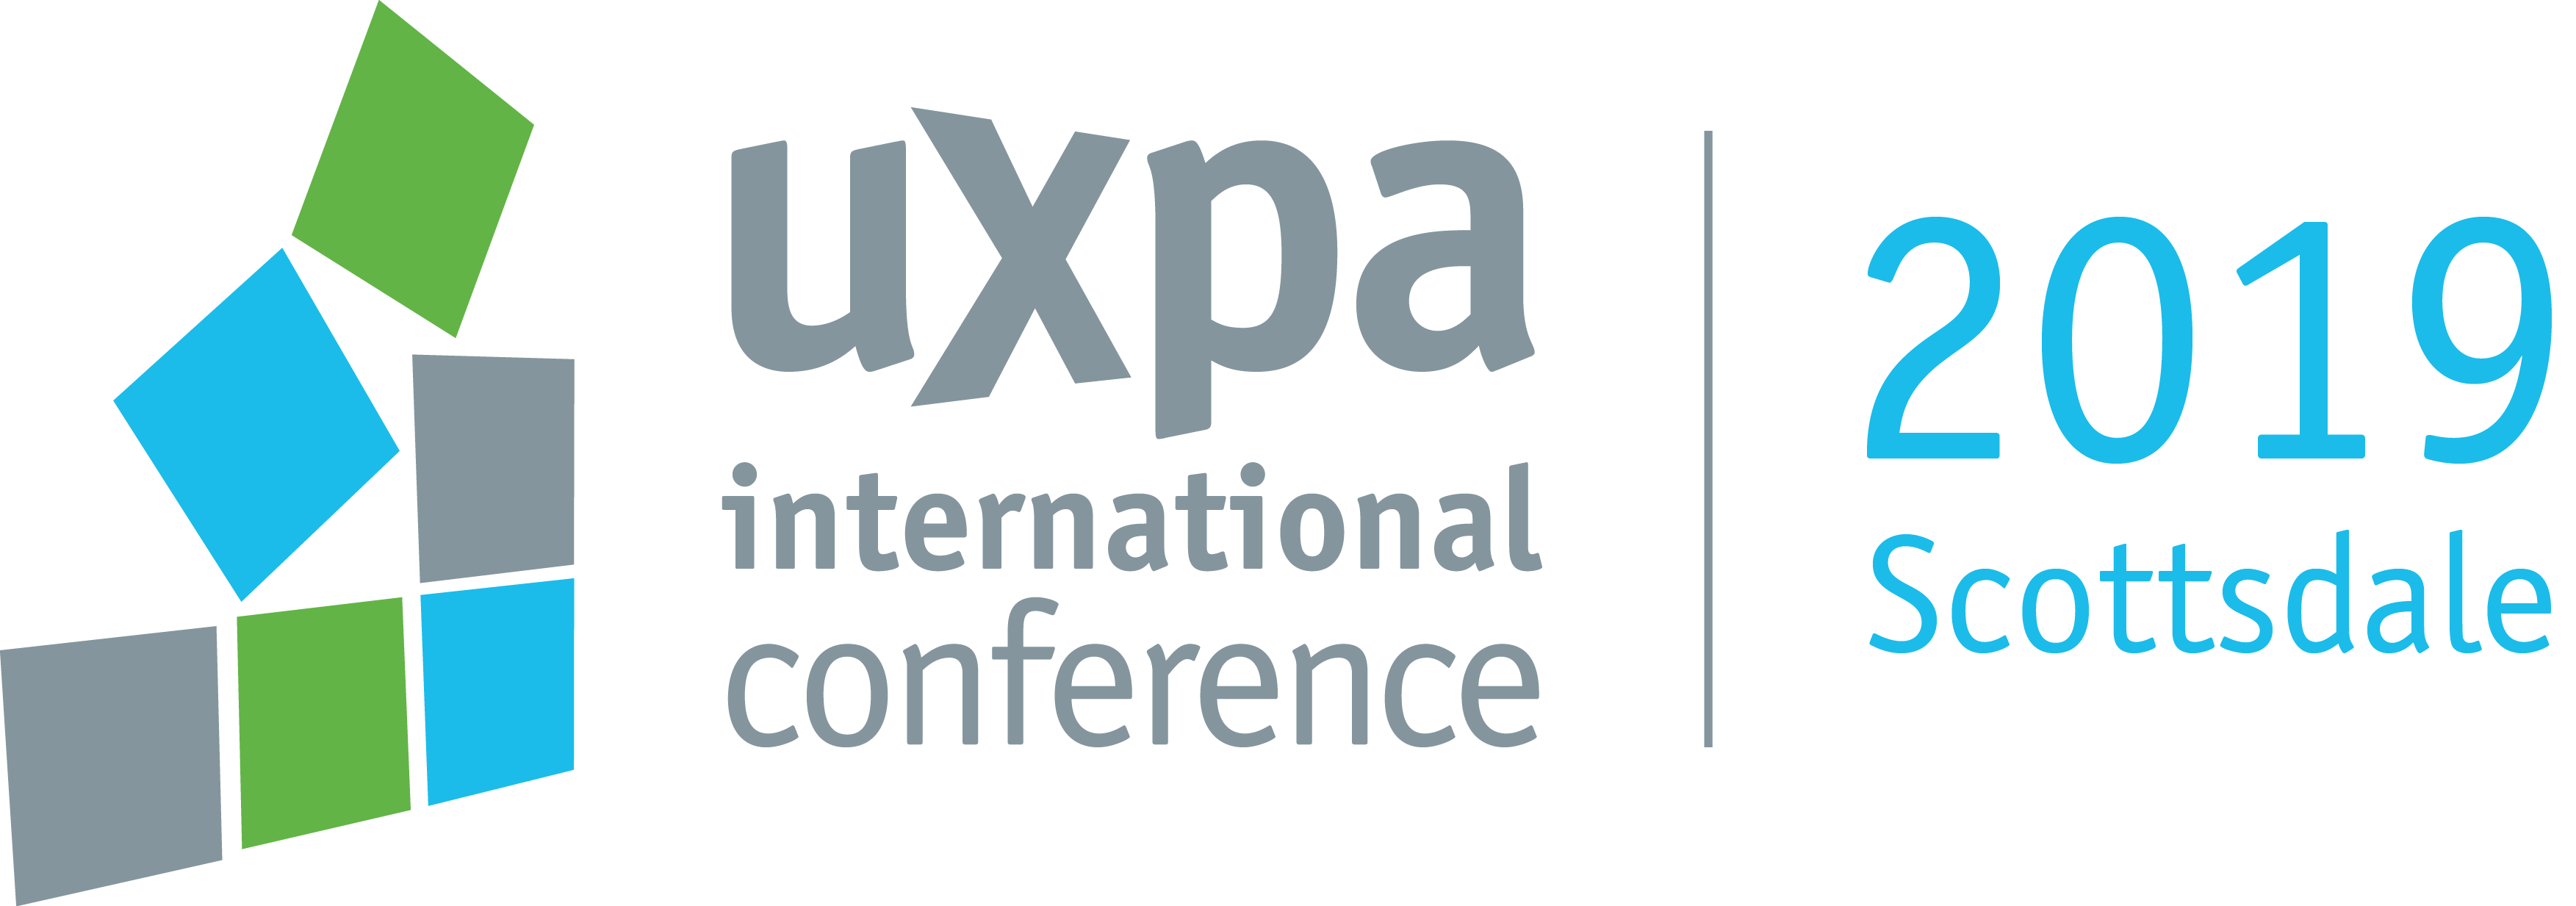 Logo UXPA 2019 International Conference